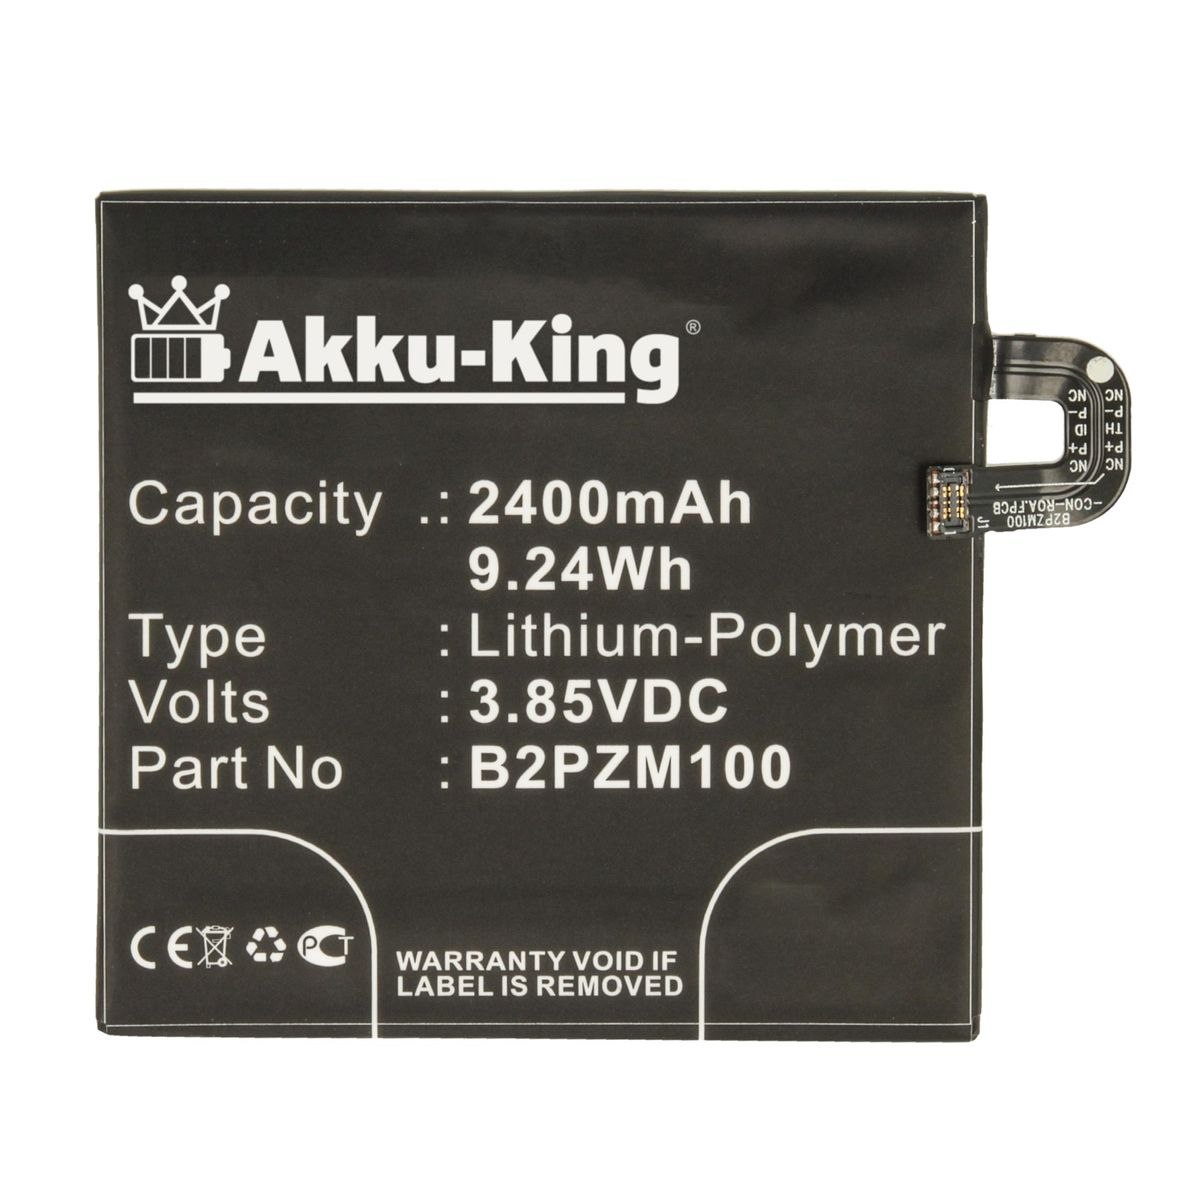 Volt, 3.85 Li-Polymer Handy-Akku, HTC Akku 35H00270-00M kompatibel AKKU-KING mit 2400mAh